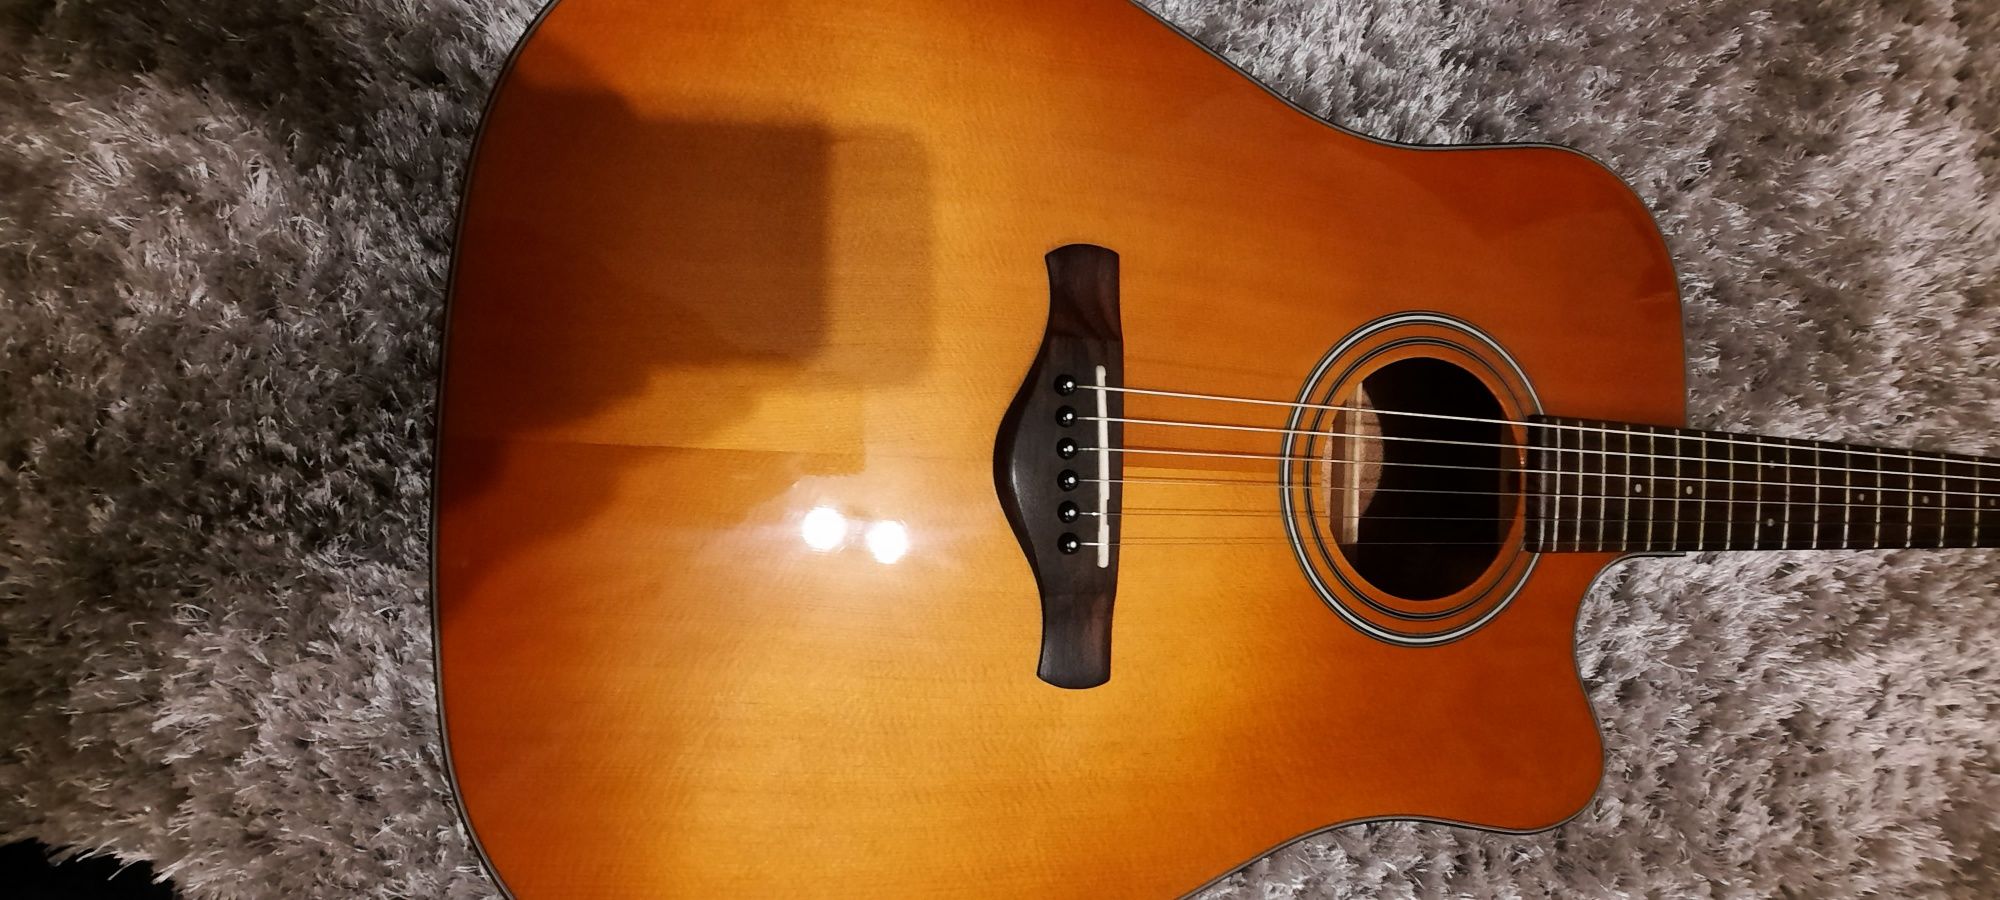 Vand chitara Ibanez AW400CE LGV natural